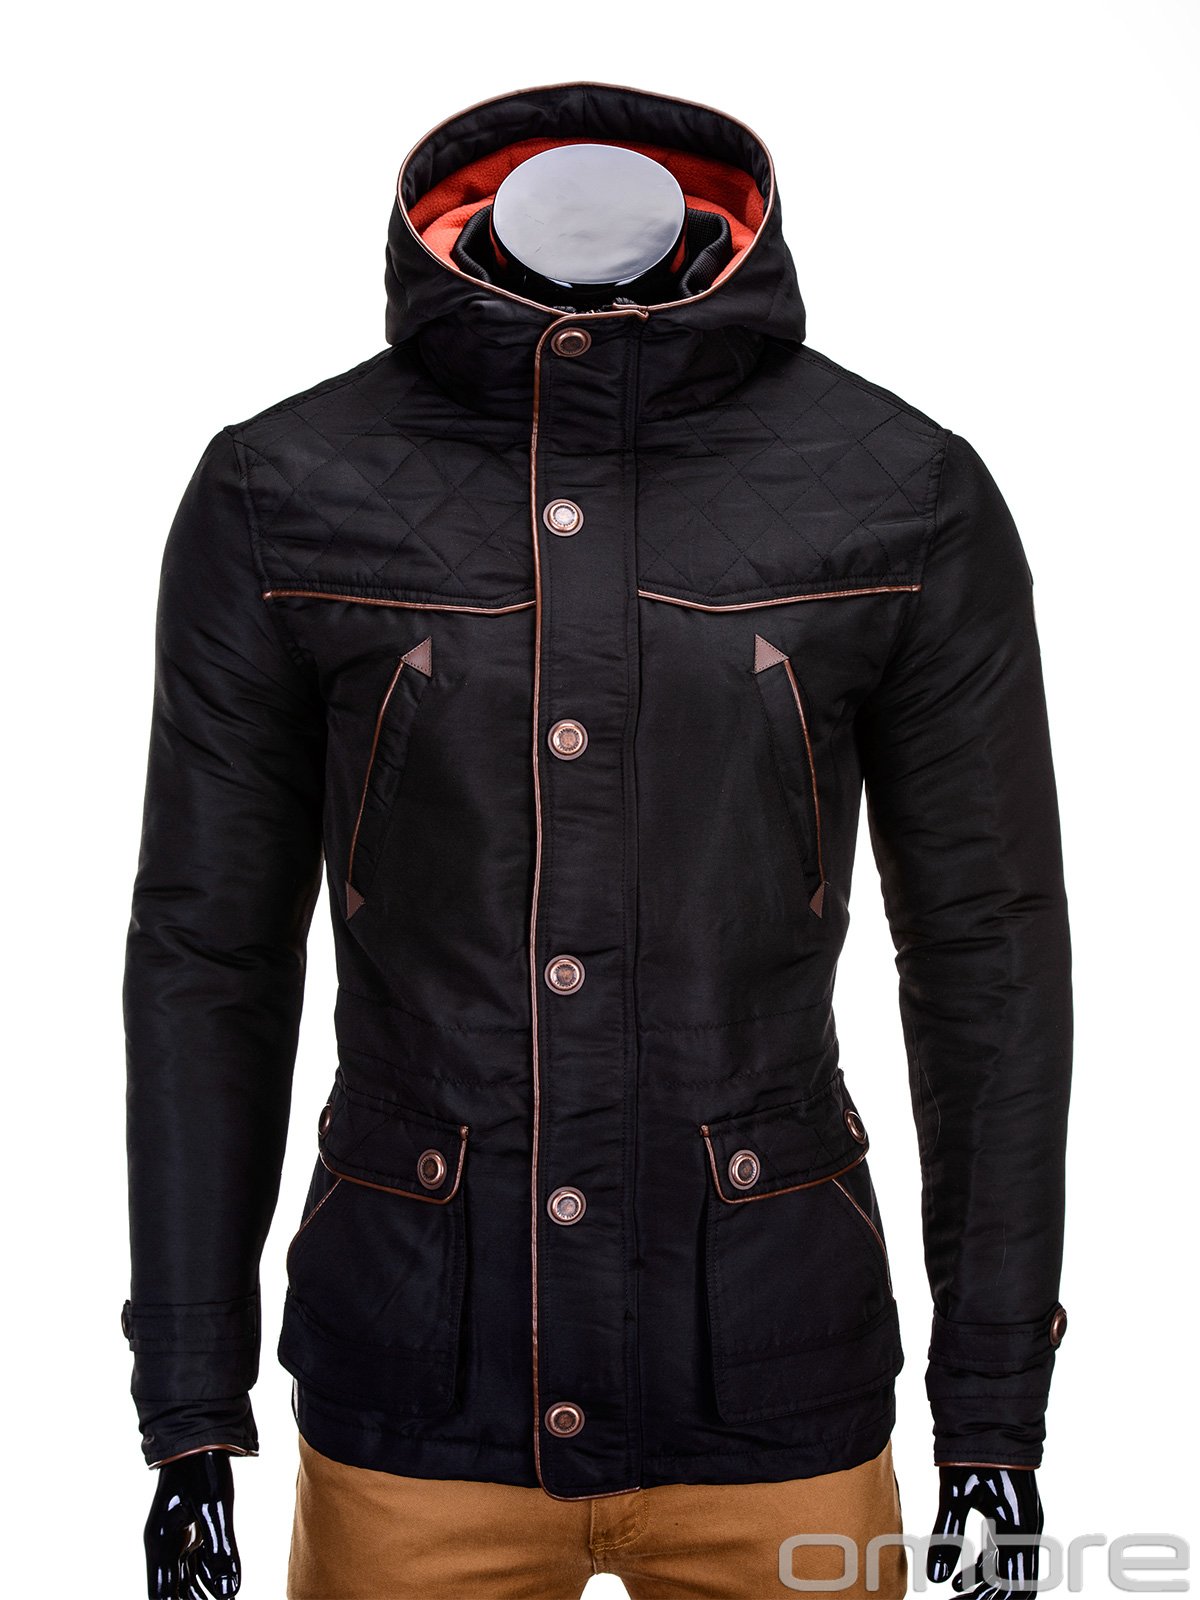 Jacket - black C213 | Ombre.com - Men's clothing online